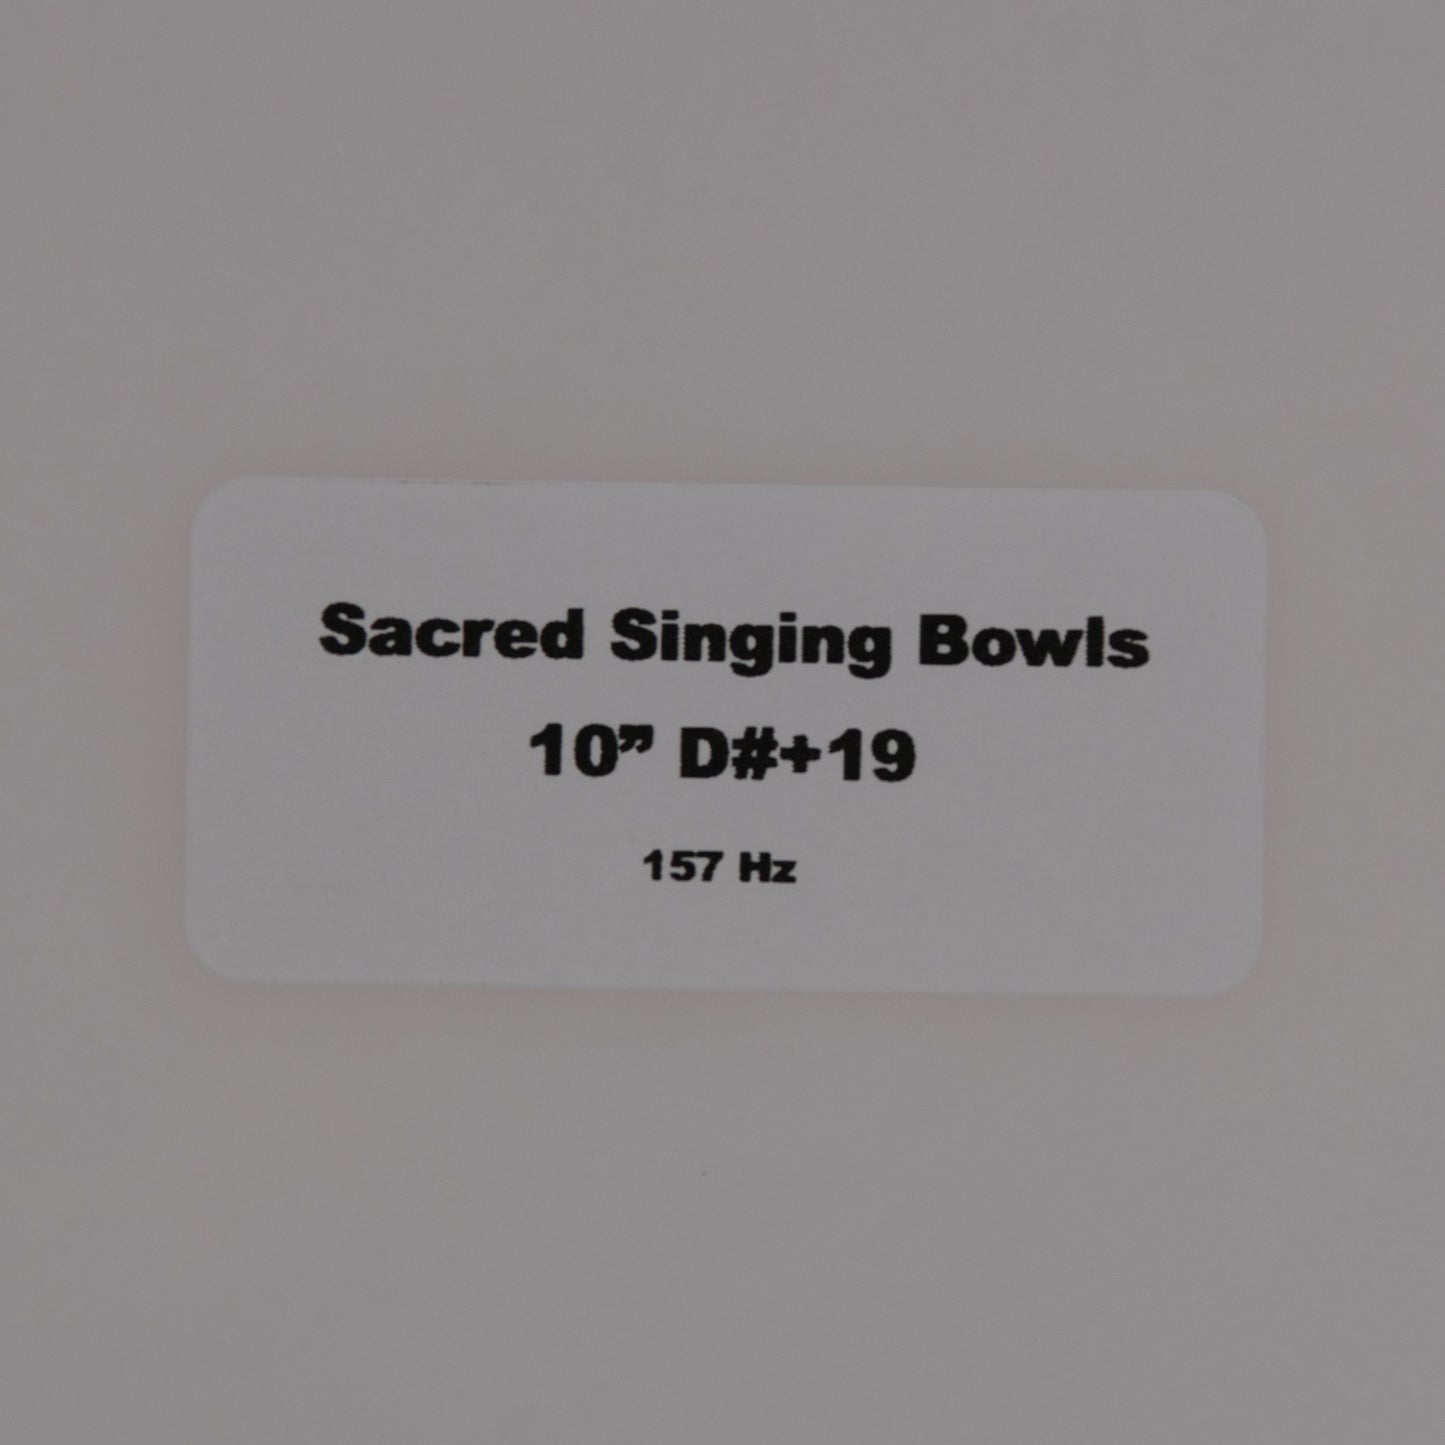 10" D#+19 White Light Quartz Crystal Singing Bowl, Sacred Singing Bowls